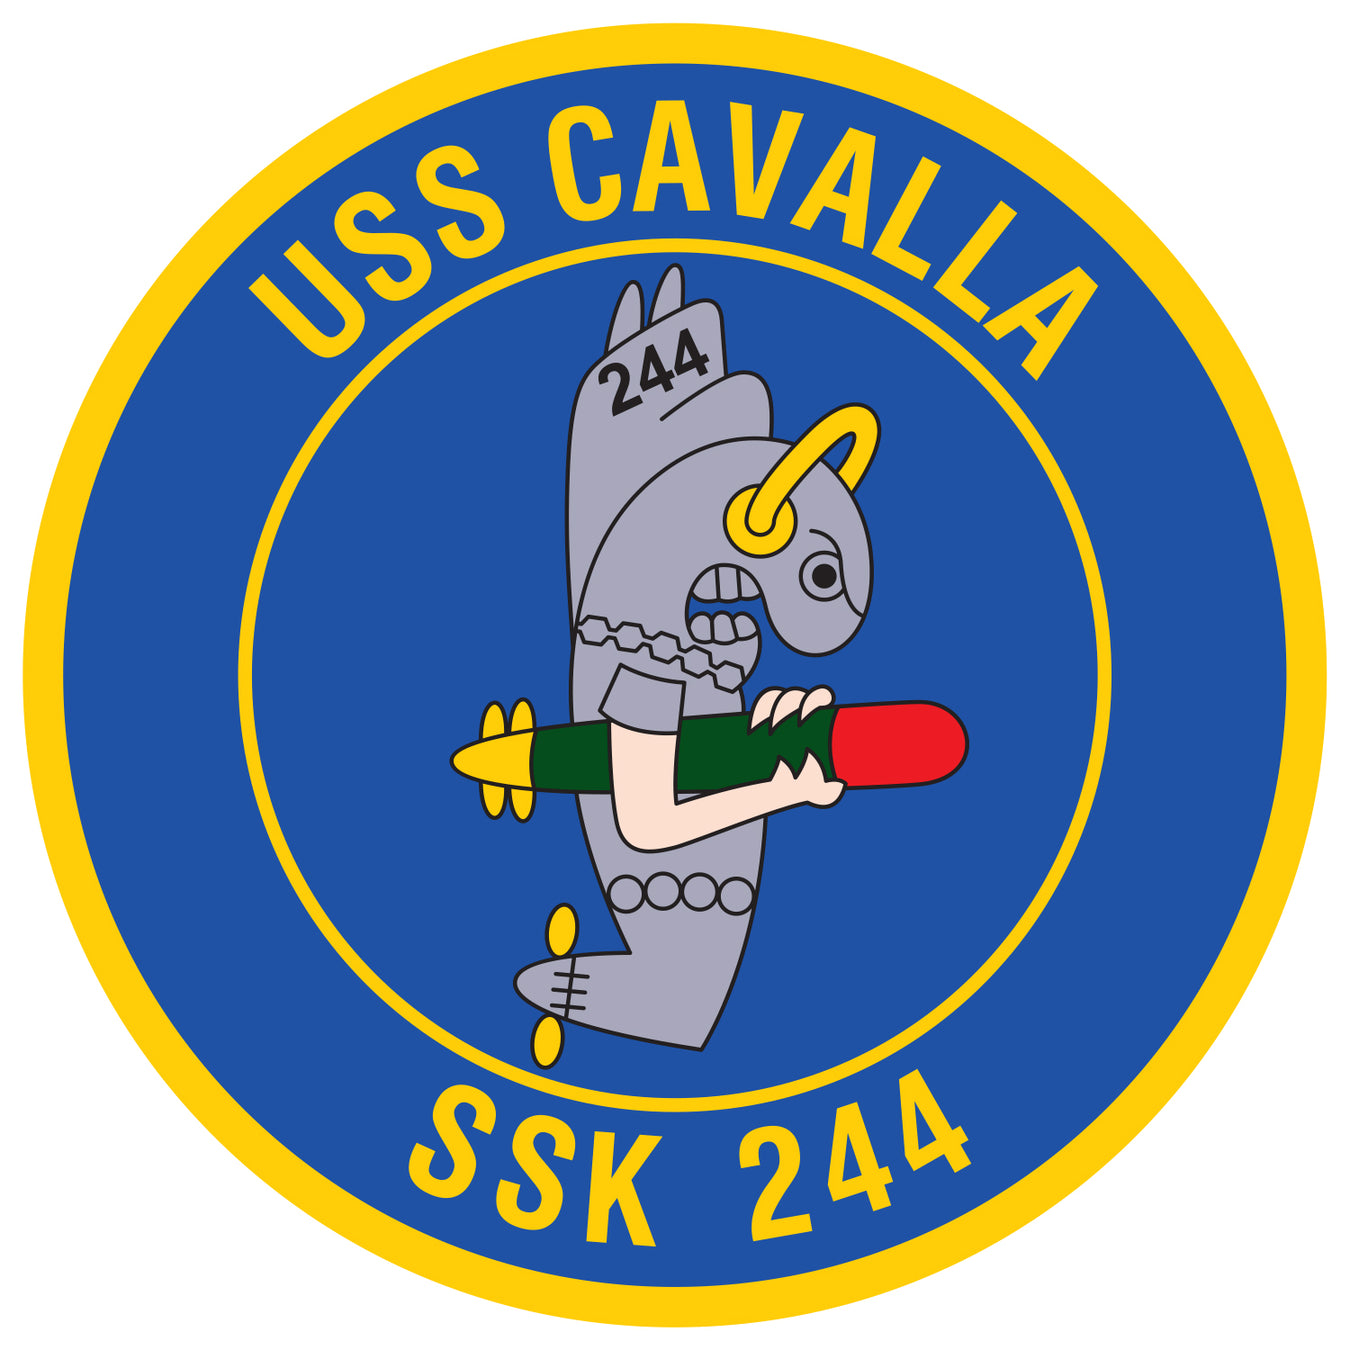 USS Cavalla (SSK-244)